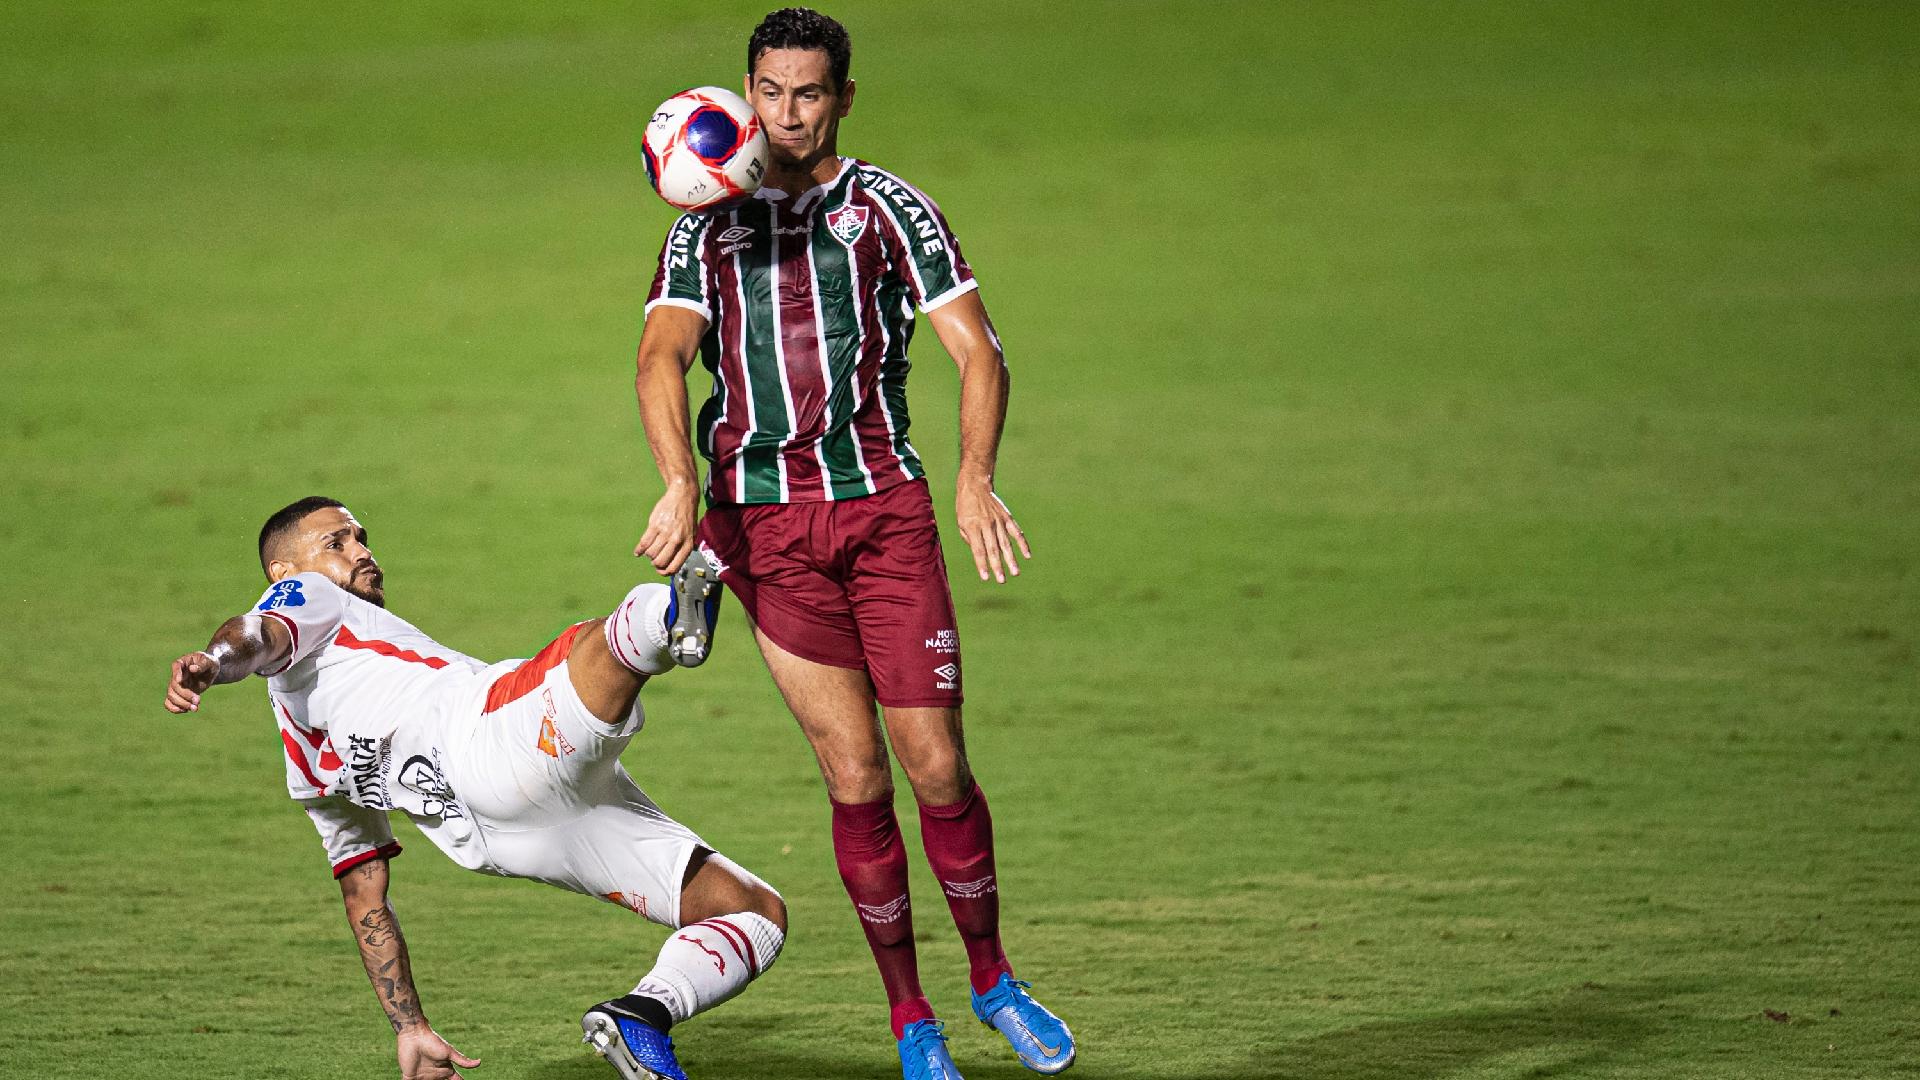 Lucas Lucena e Paulo Henrique Ganso disputam a bola na partida entre Bangu x Fluminense, pelo Campeonato Carioca